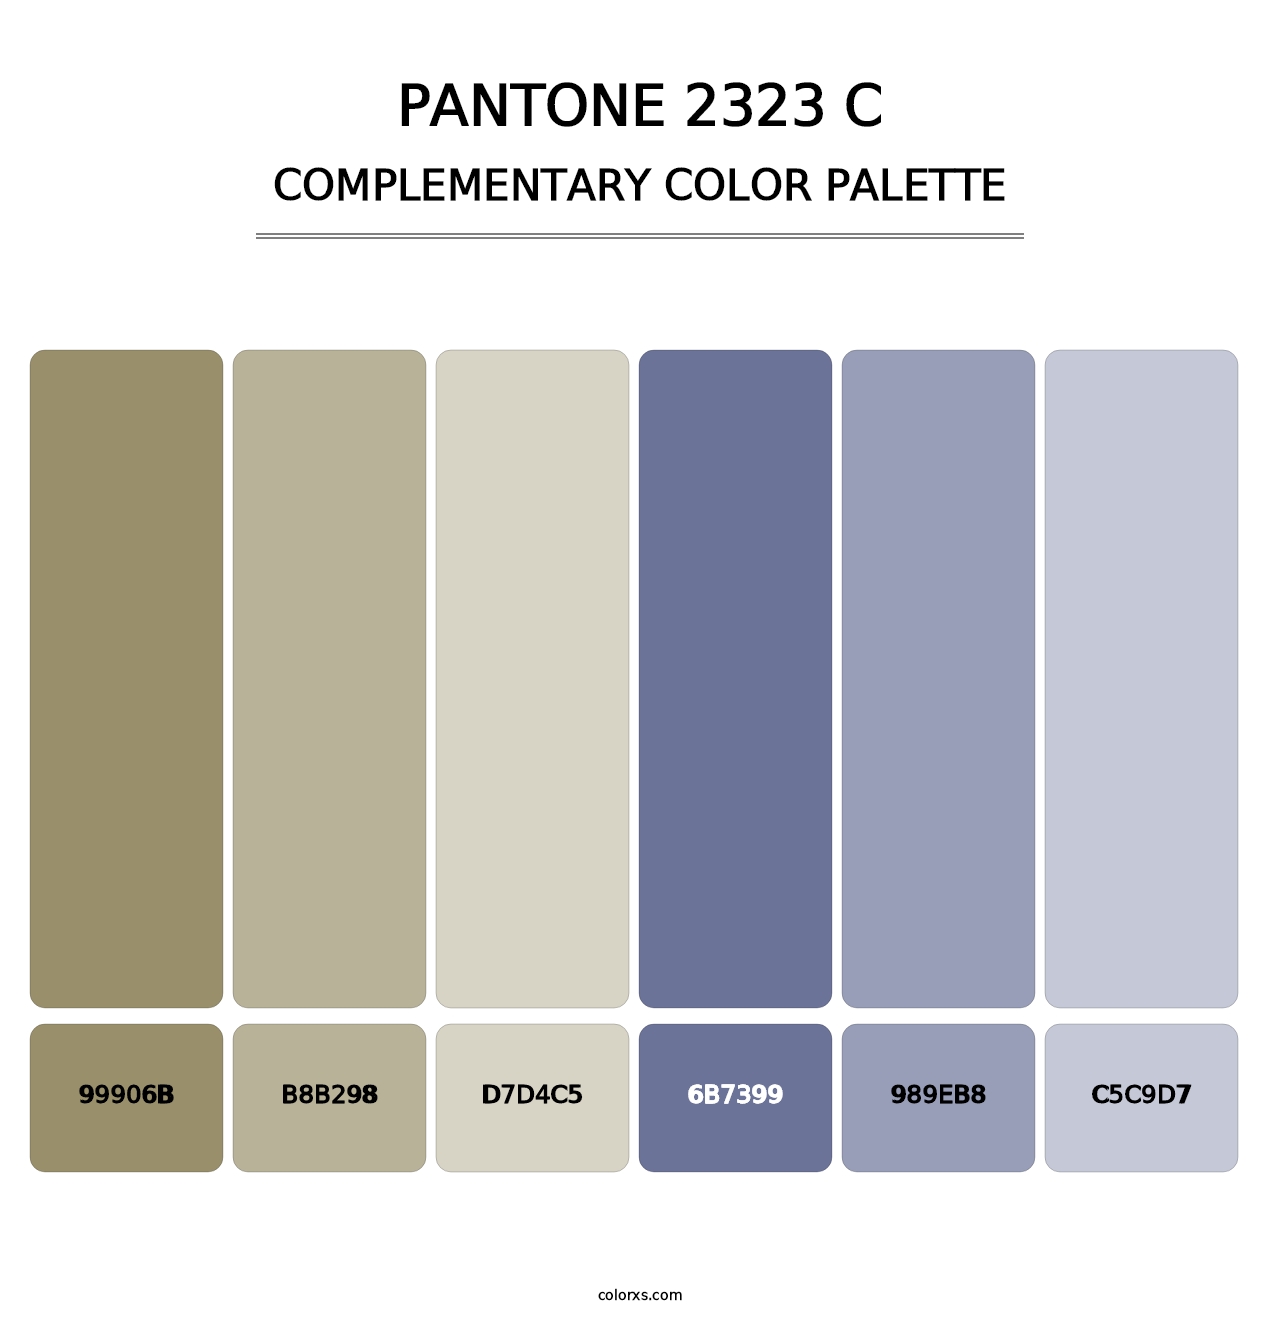 PANTONE 2323 C - Complementary Color Palette